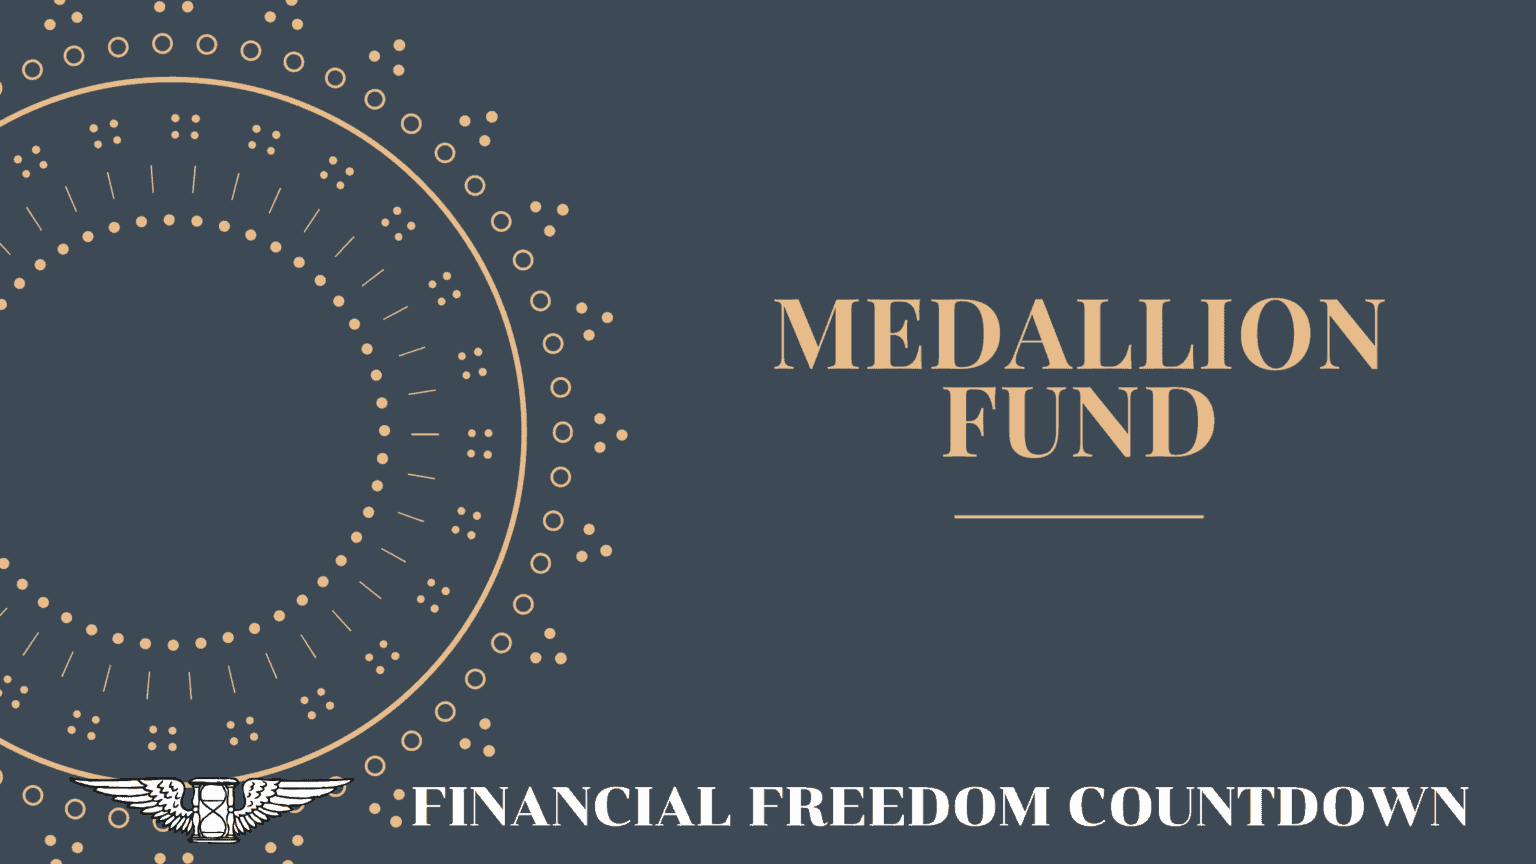 Jim Simons, Renaissance Technologies And Medallion Fund Financial